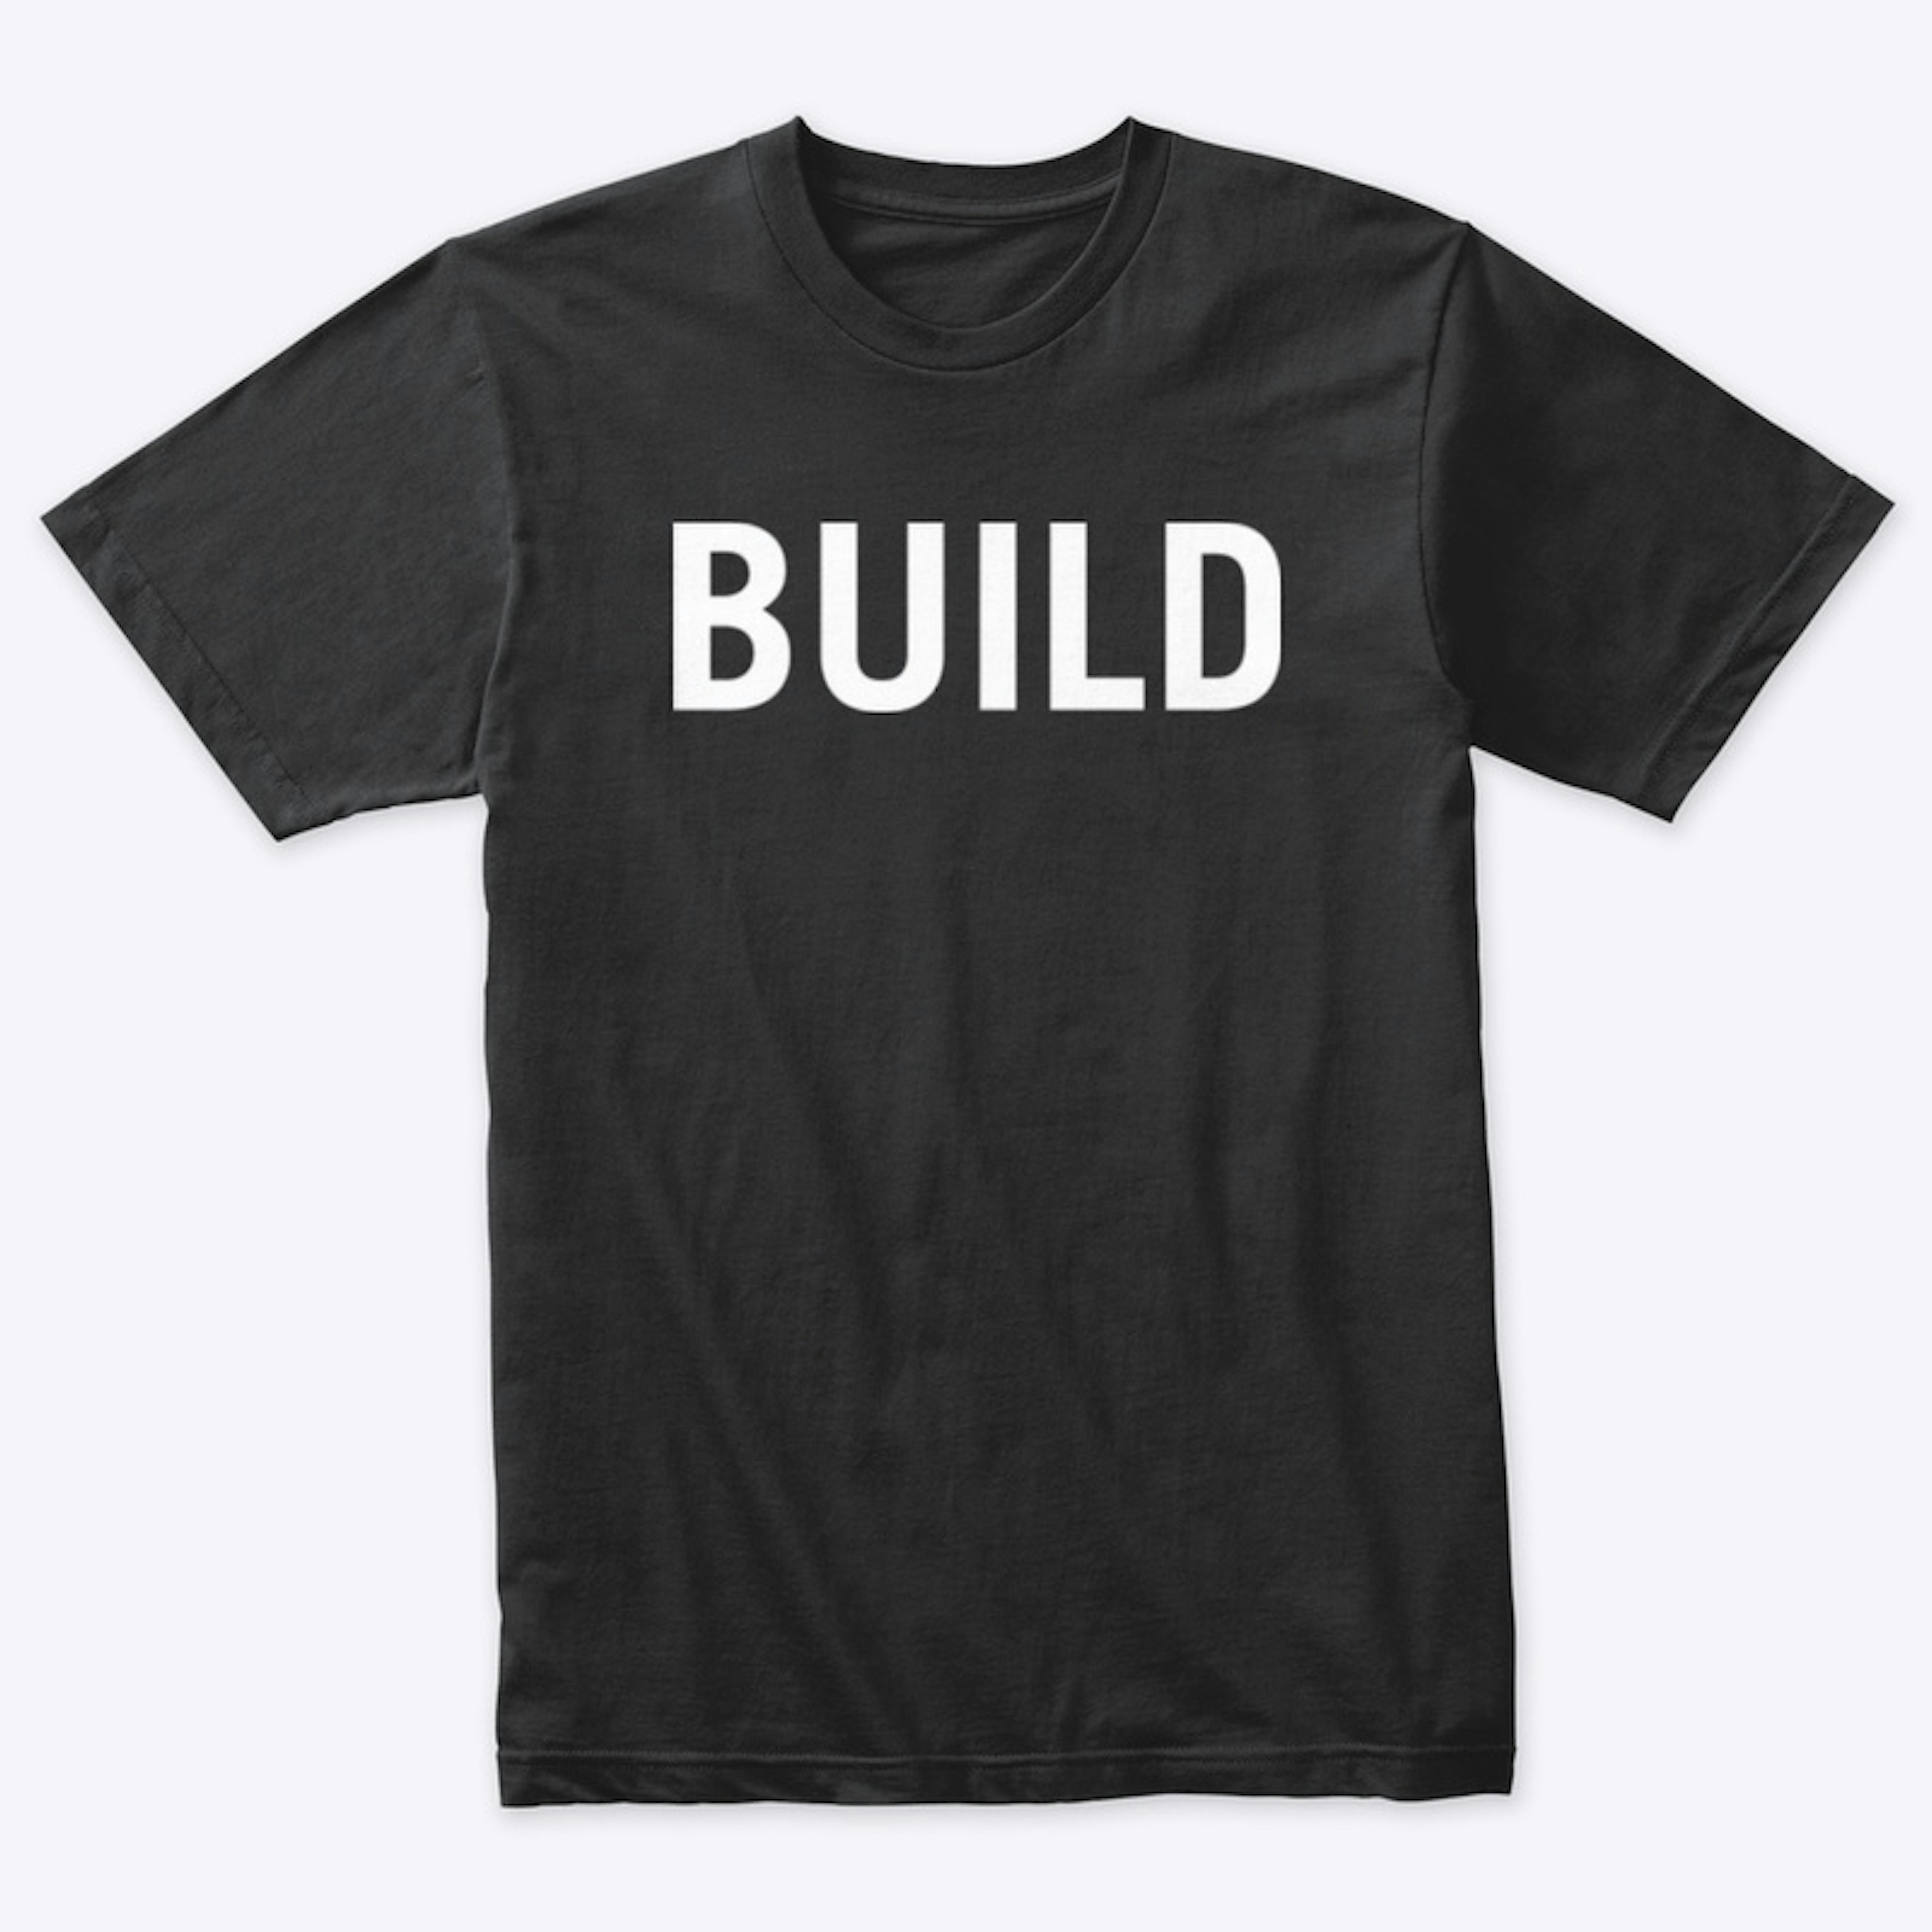 Build t-shirt